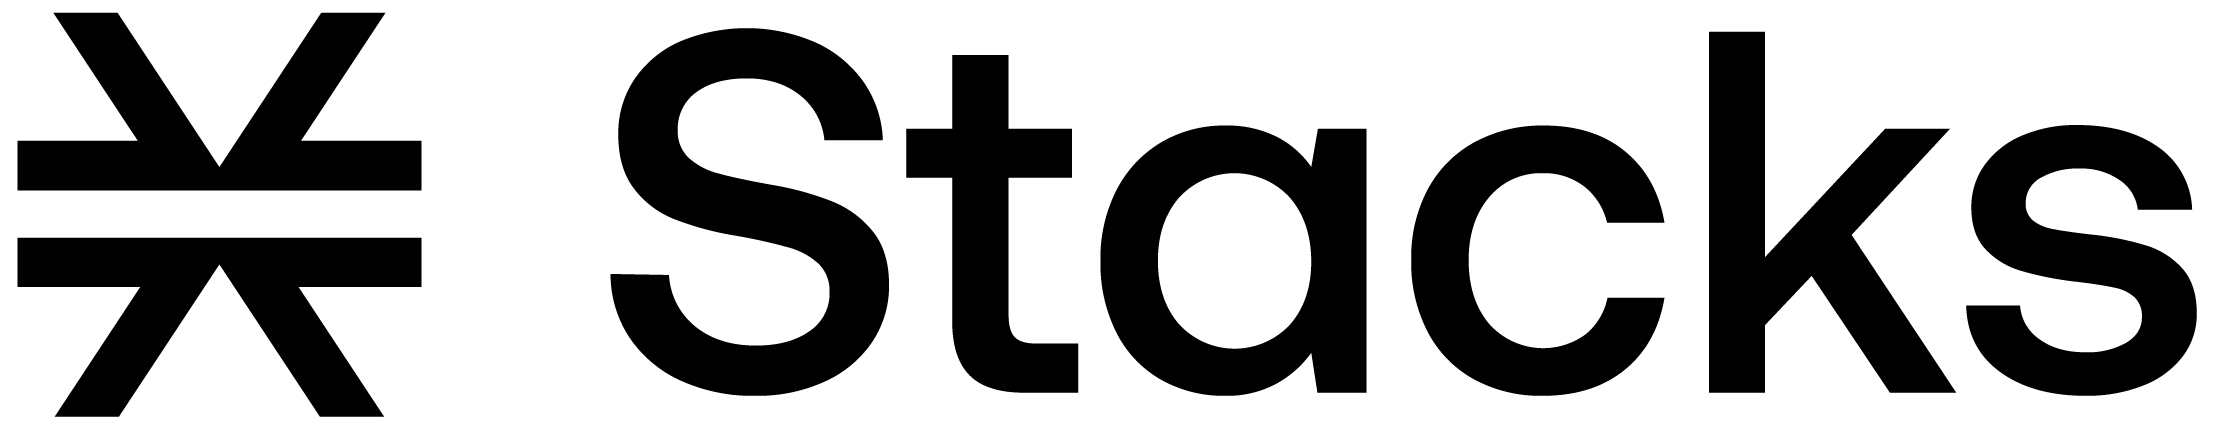 Stacks logo colors